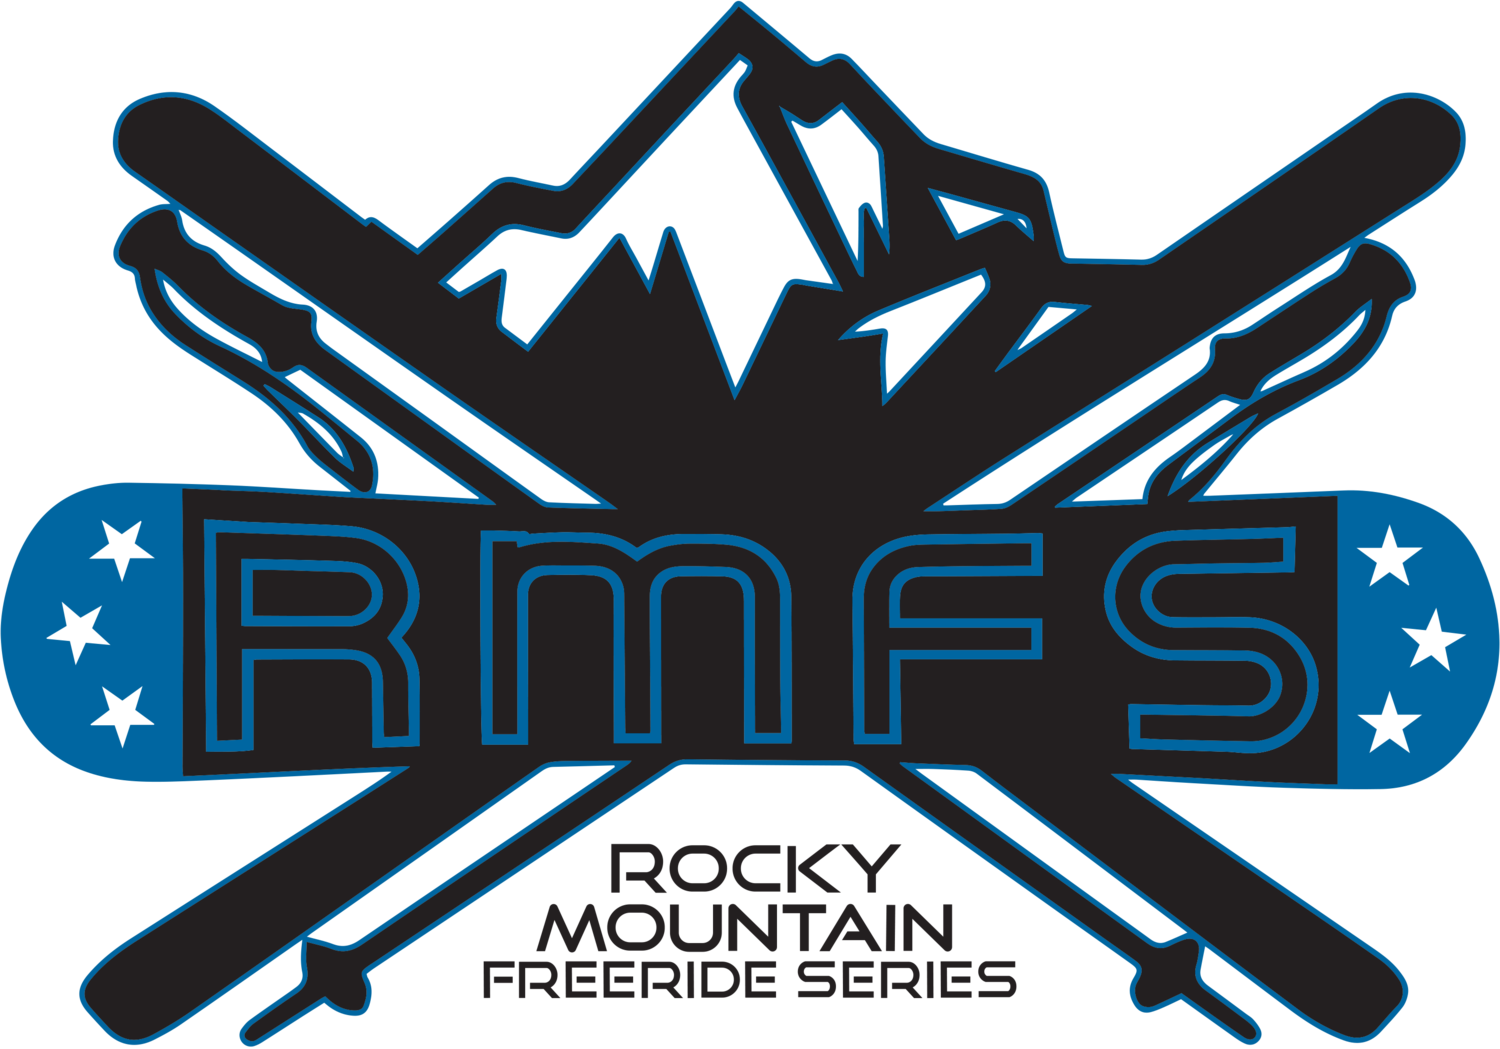 Rocky Mountain Freeride Series